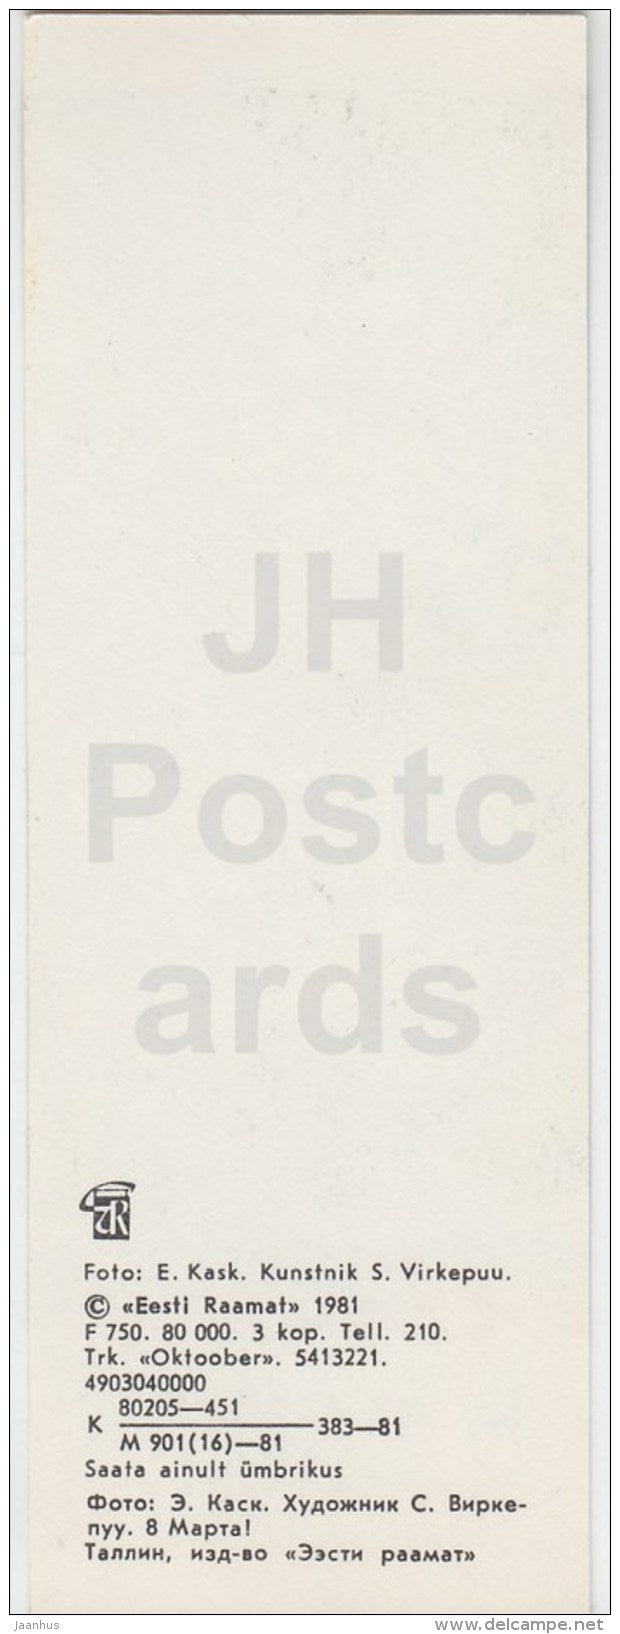 8th March greeting card - Blue Flower - 1981 - Estonia USSR - unused - JH Postcards